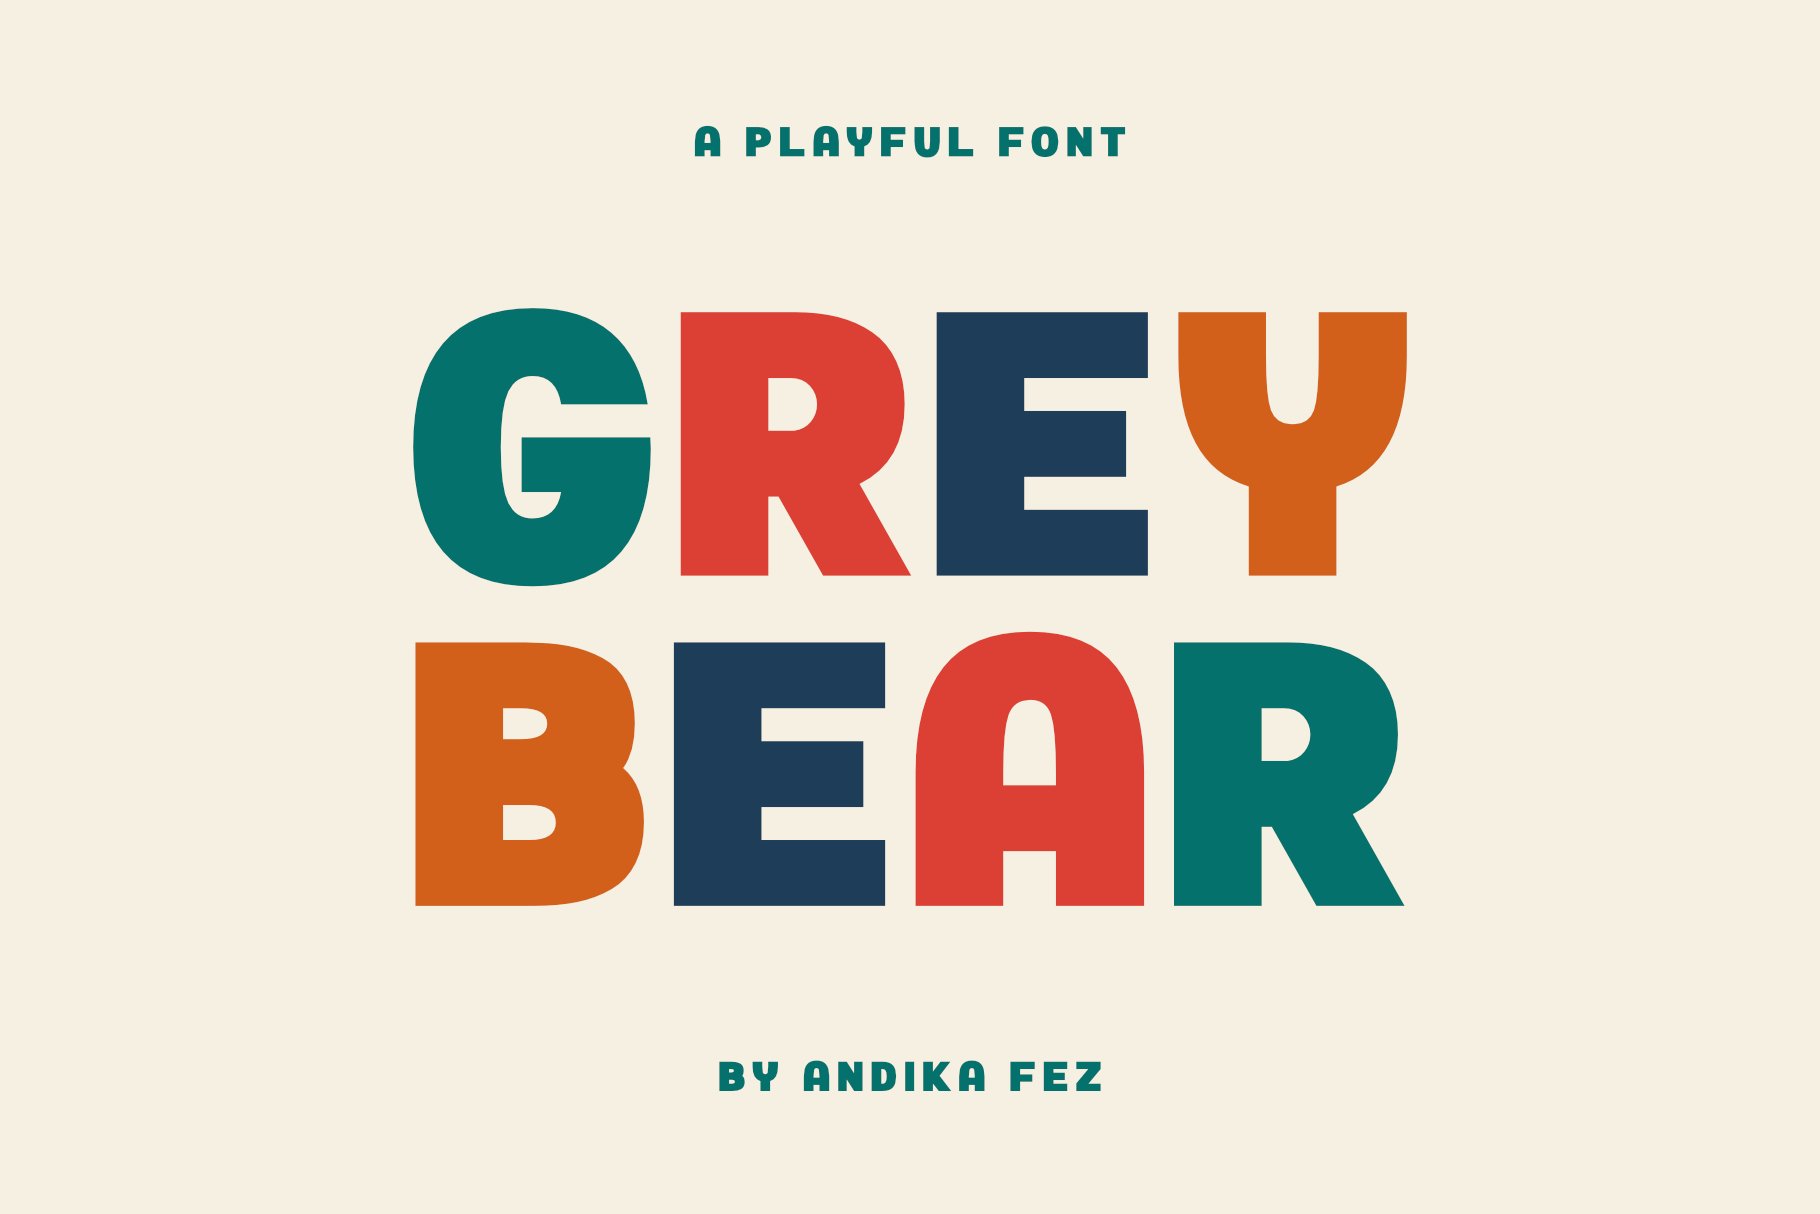 GREY BEAR A PLAYFUL FONT cover image.